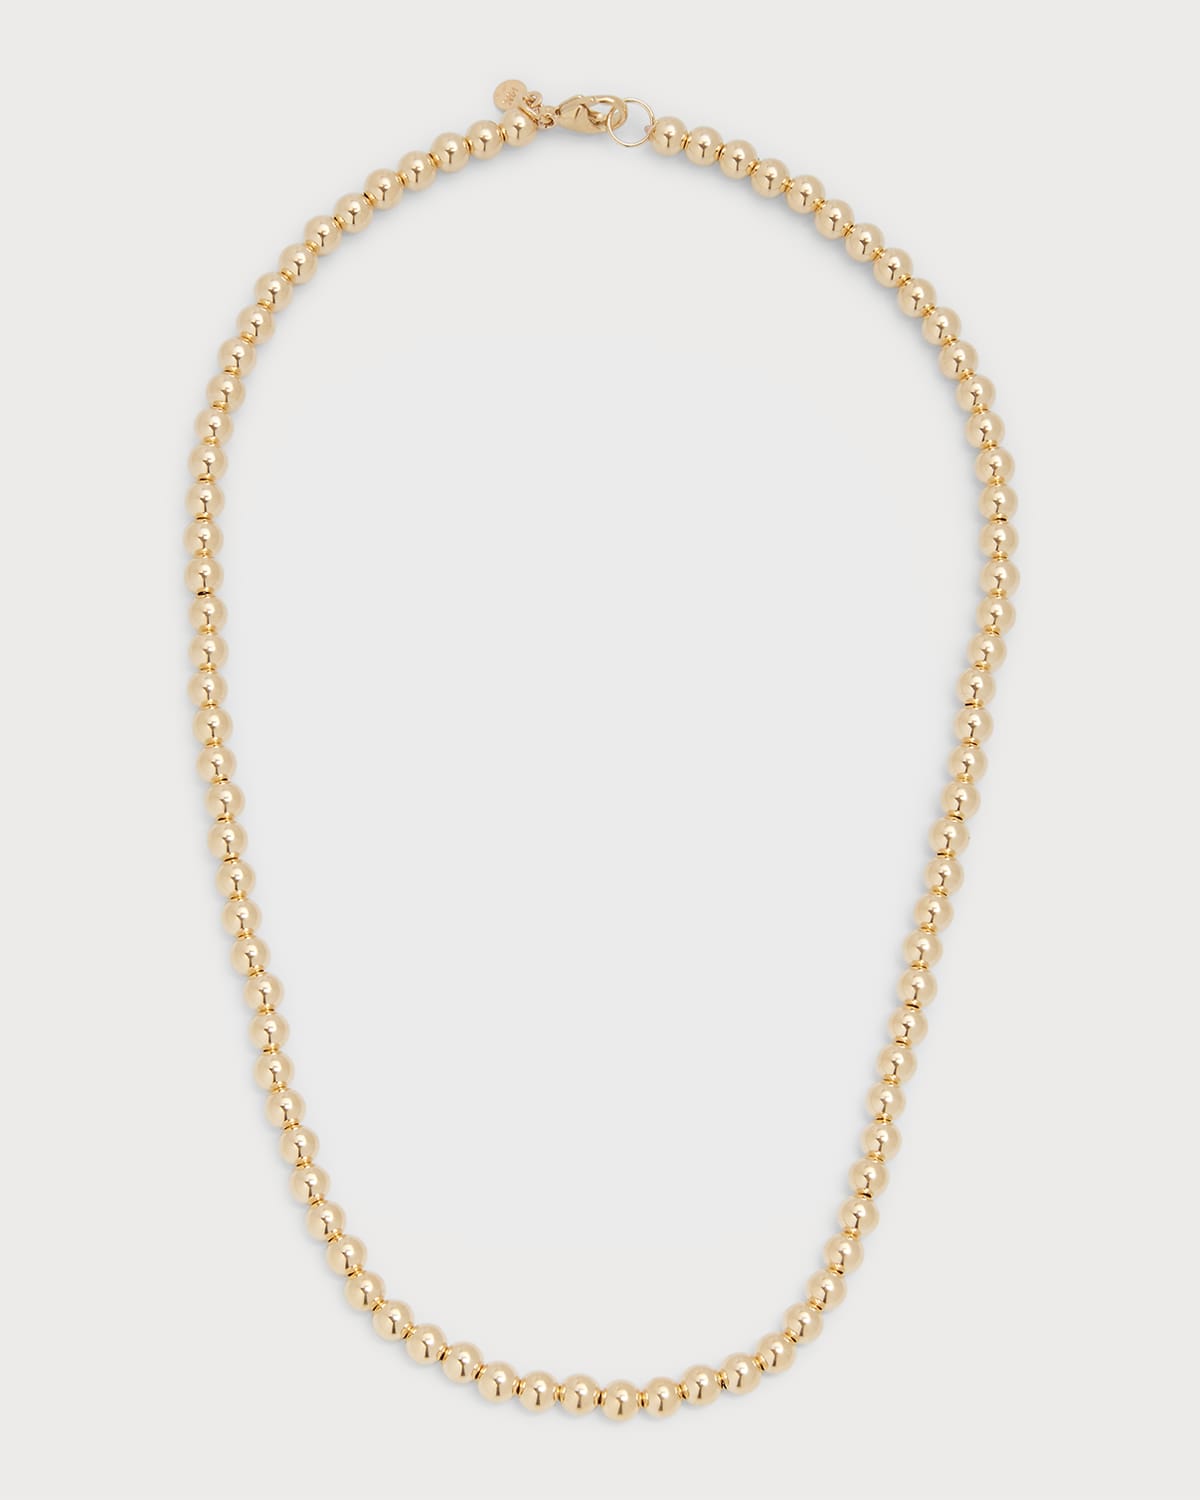 Zoe Lev Jewelry 14k Gold 5mm Bead Necklace